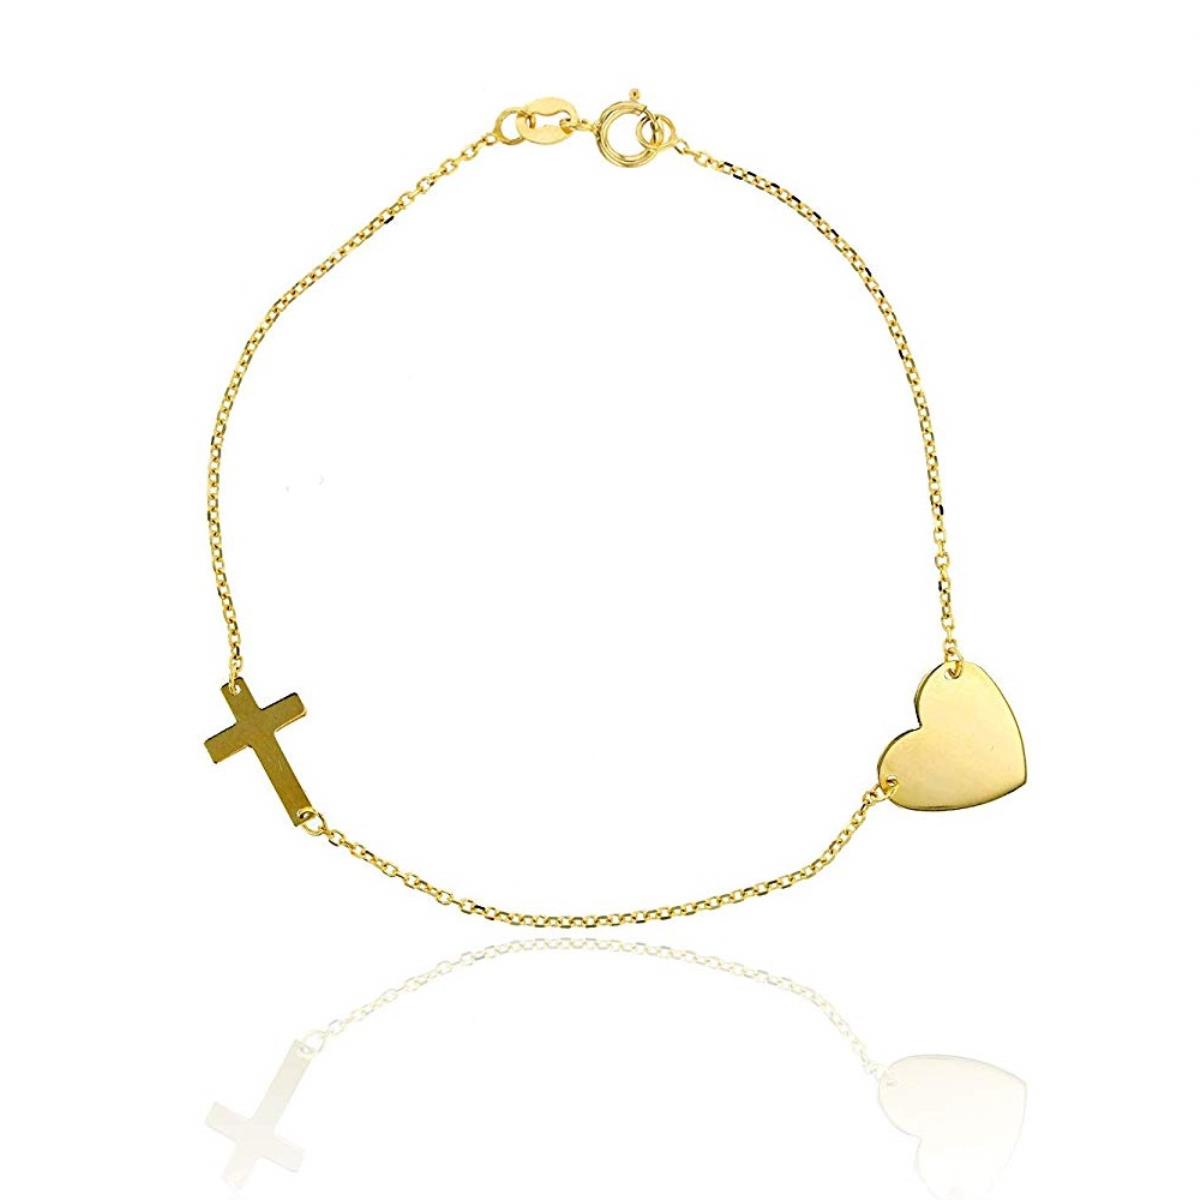 10K Yellow Gold DC Polished Heart Charm and Sideways Cross 7" Bracelet